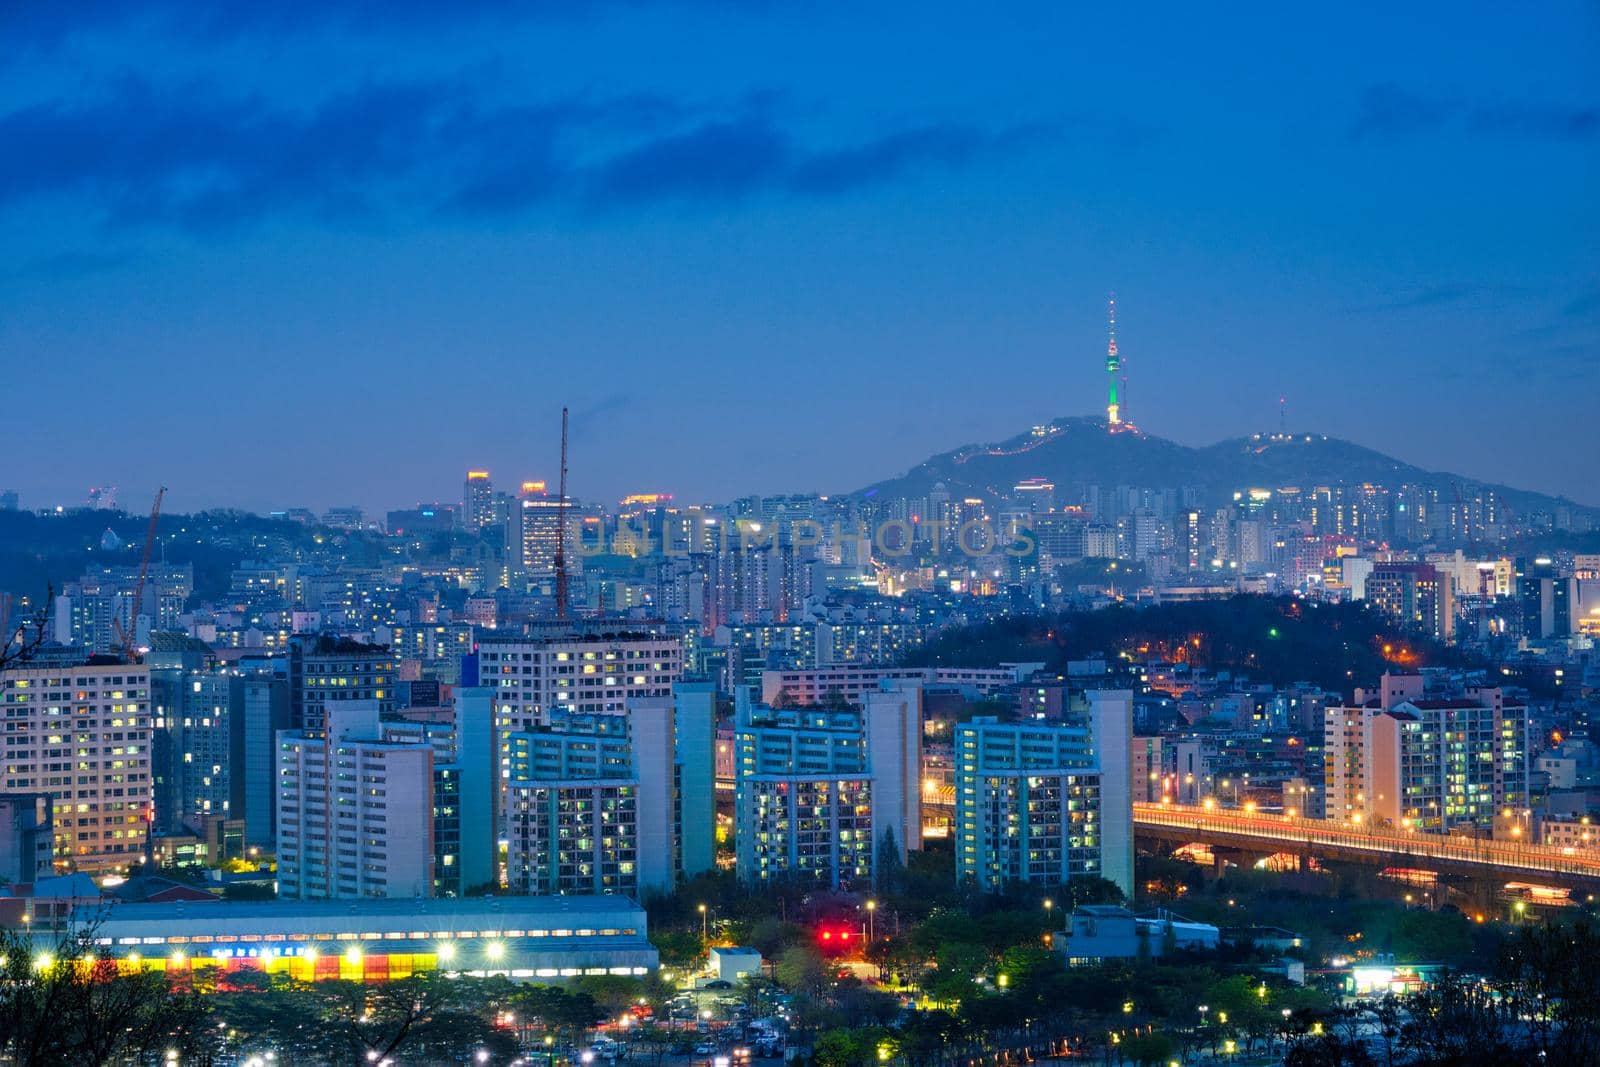 Seoul night cityscape with Namsan Tower. Seoul, South Korea